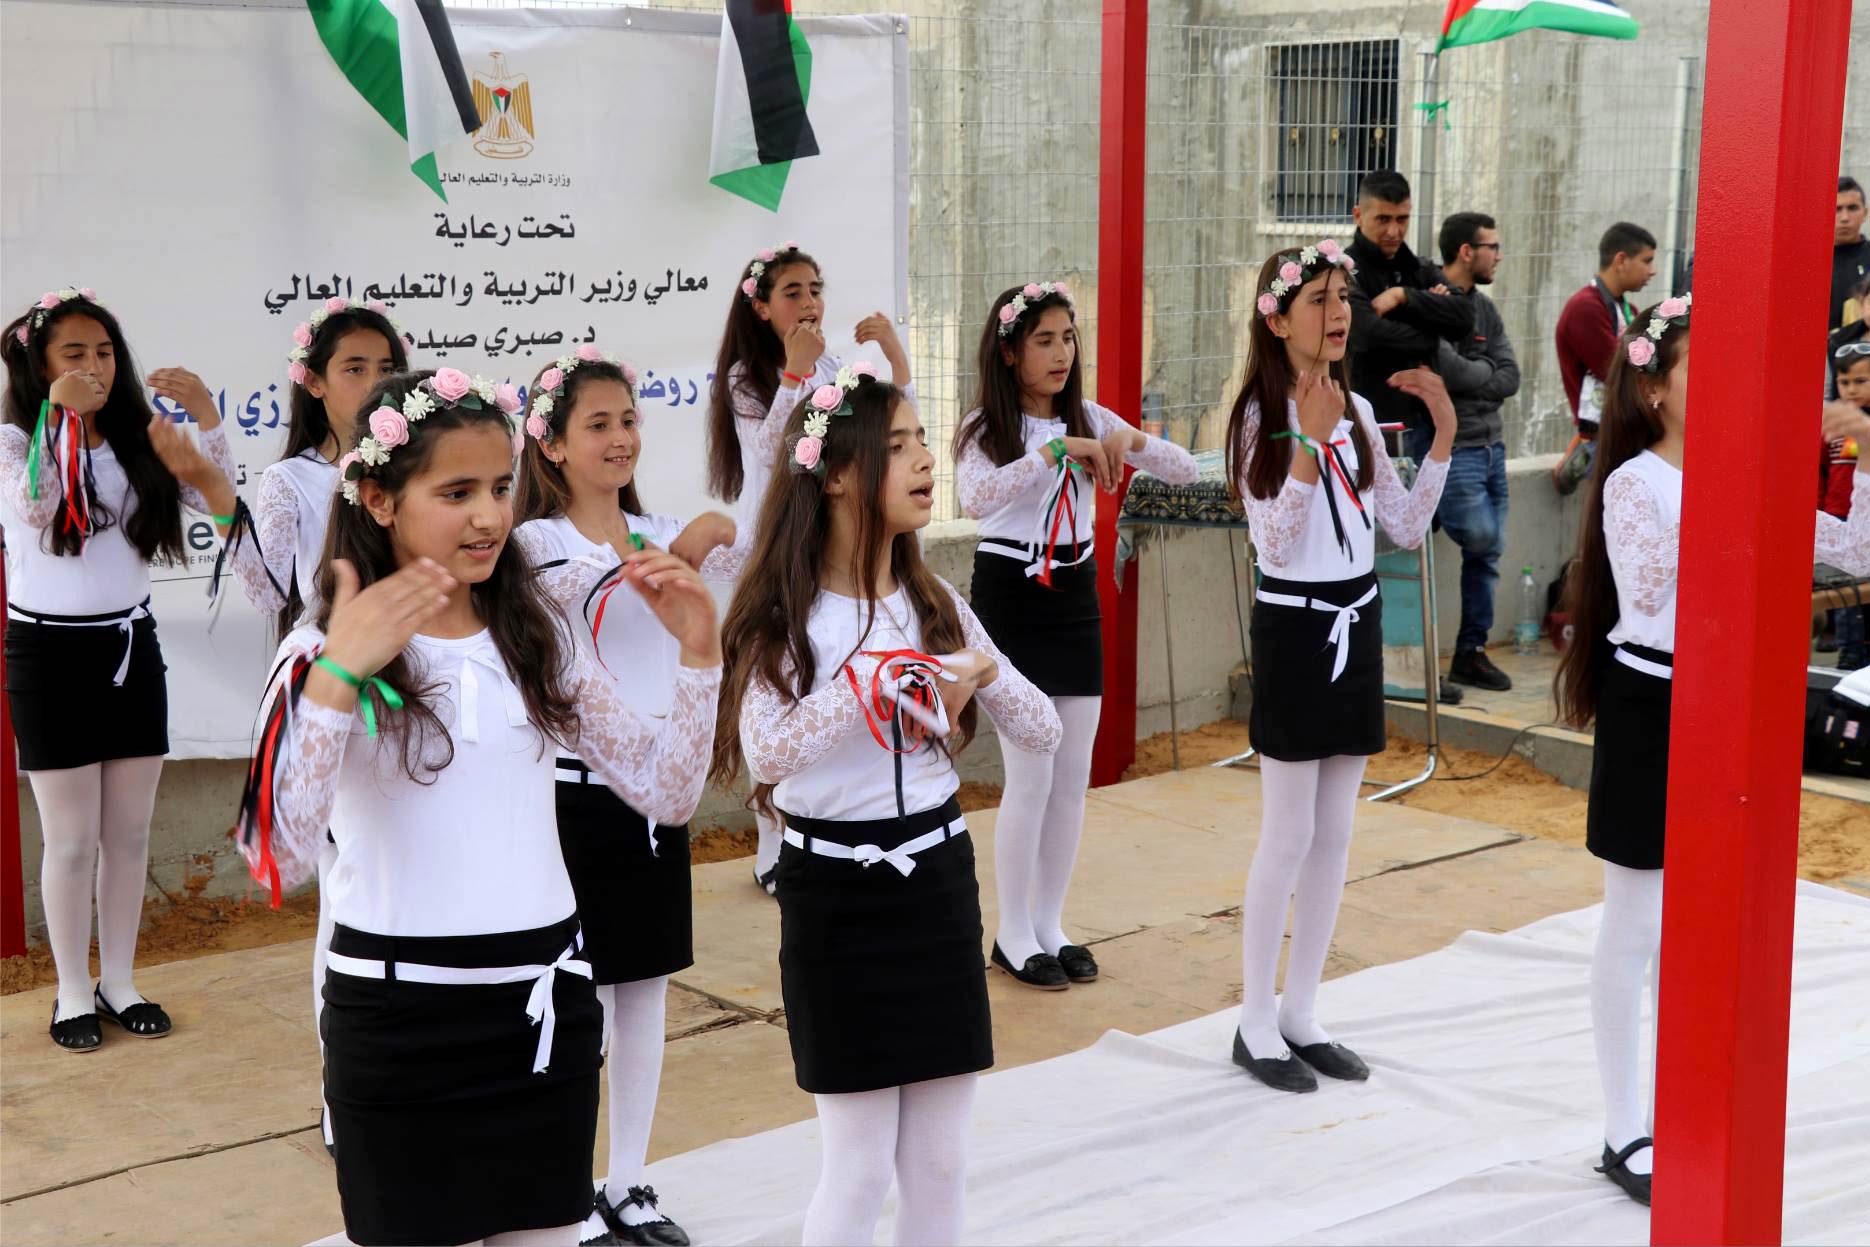 Dance performance at the Qibya kindergarten opening